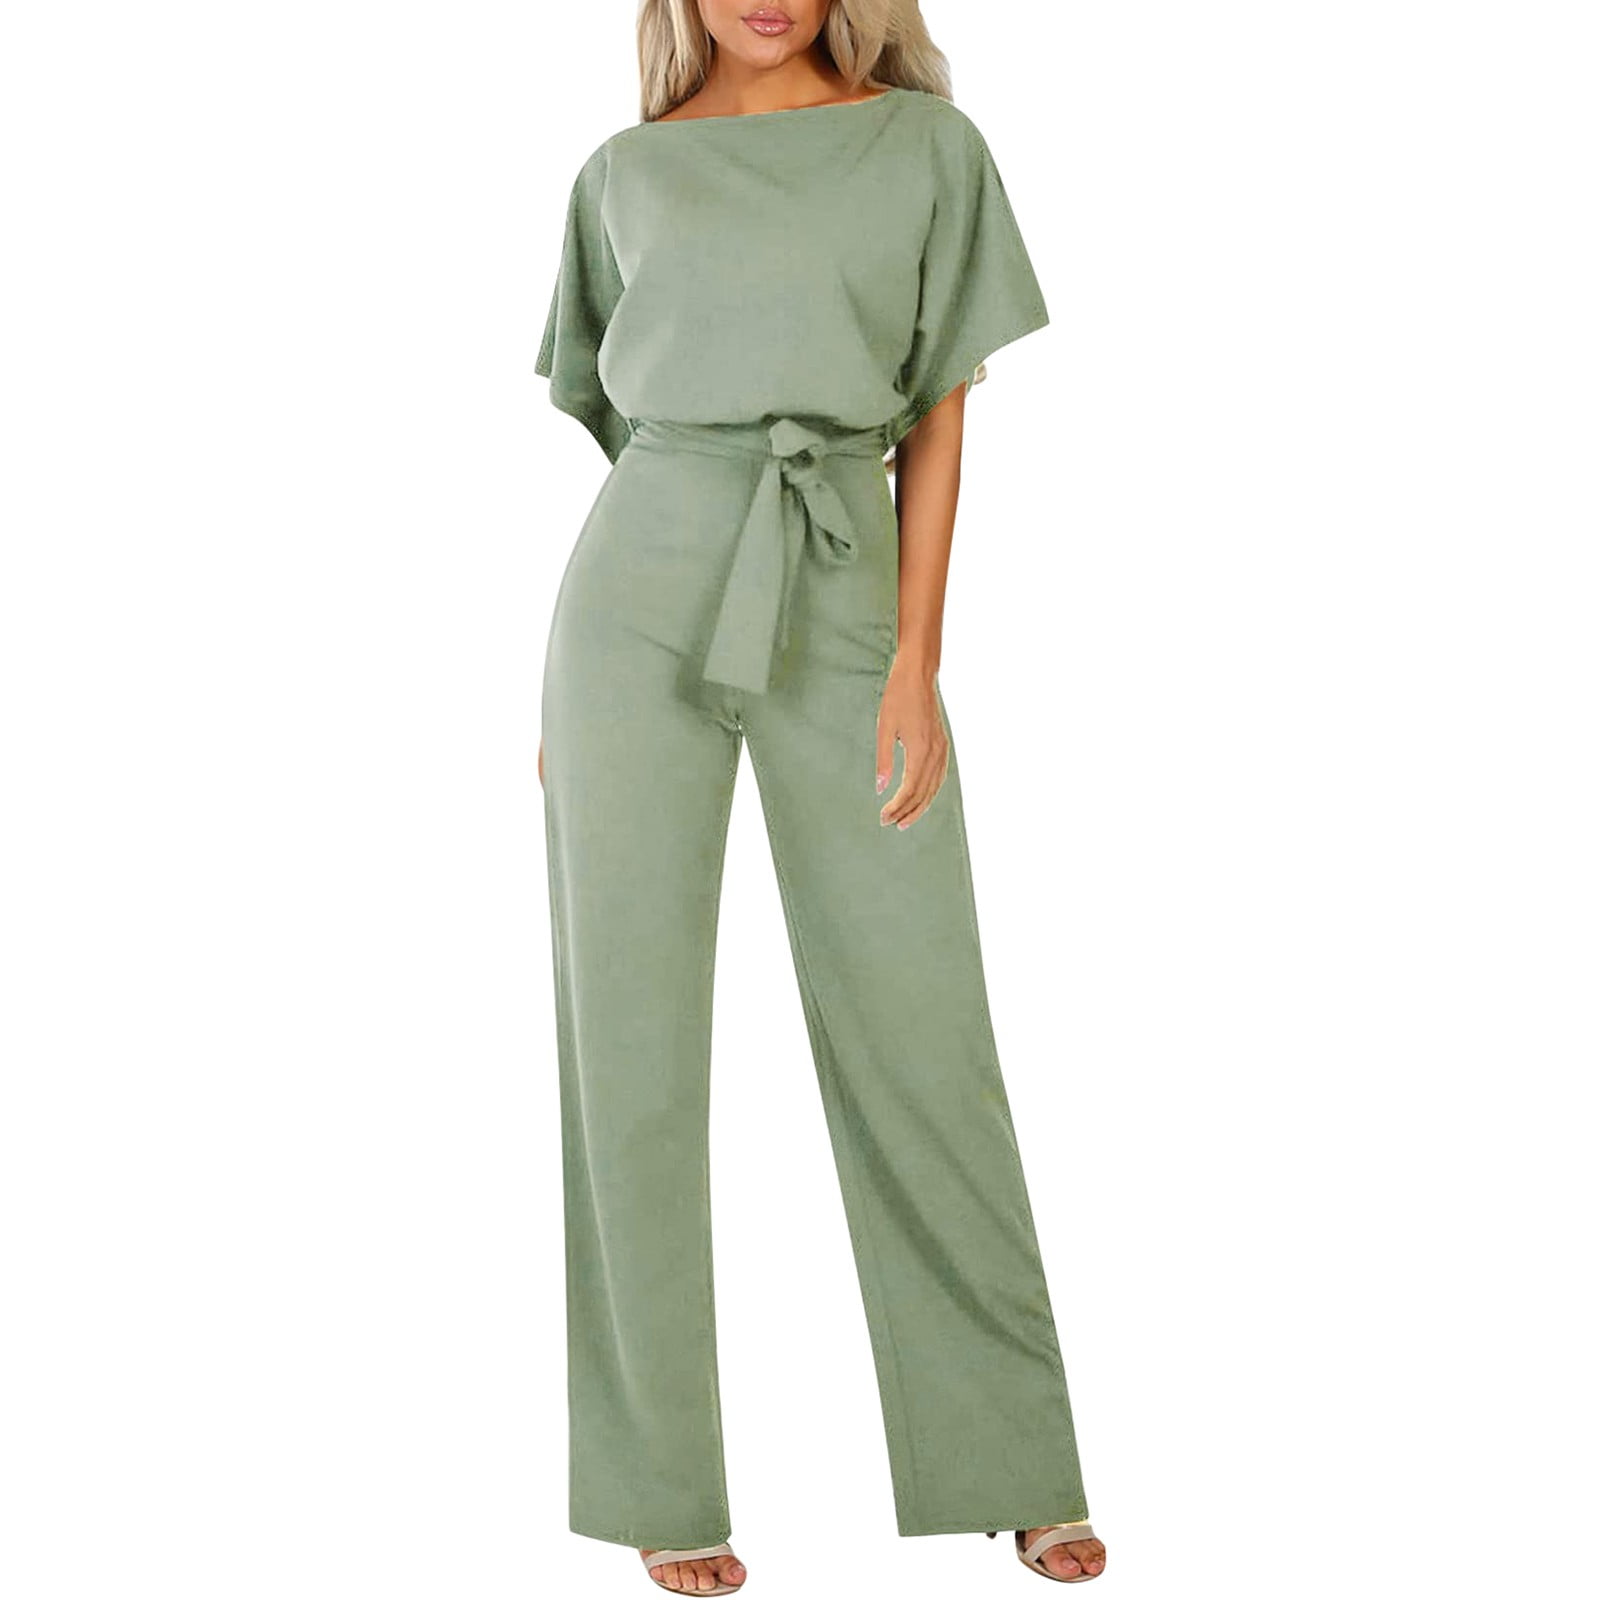 Fsqjgq Elegant&nbsp;Jumpsuit Women Solid Color Lace up Button Short Sleeved Jumpsuits Casual Pants Overalls Rompers Green L -